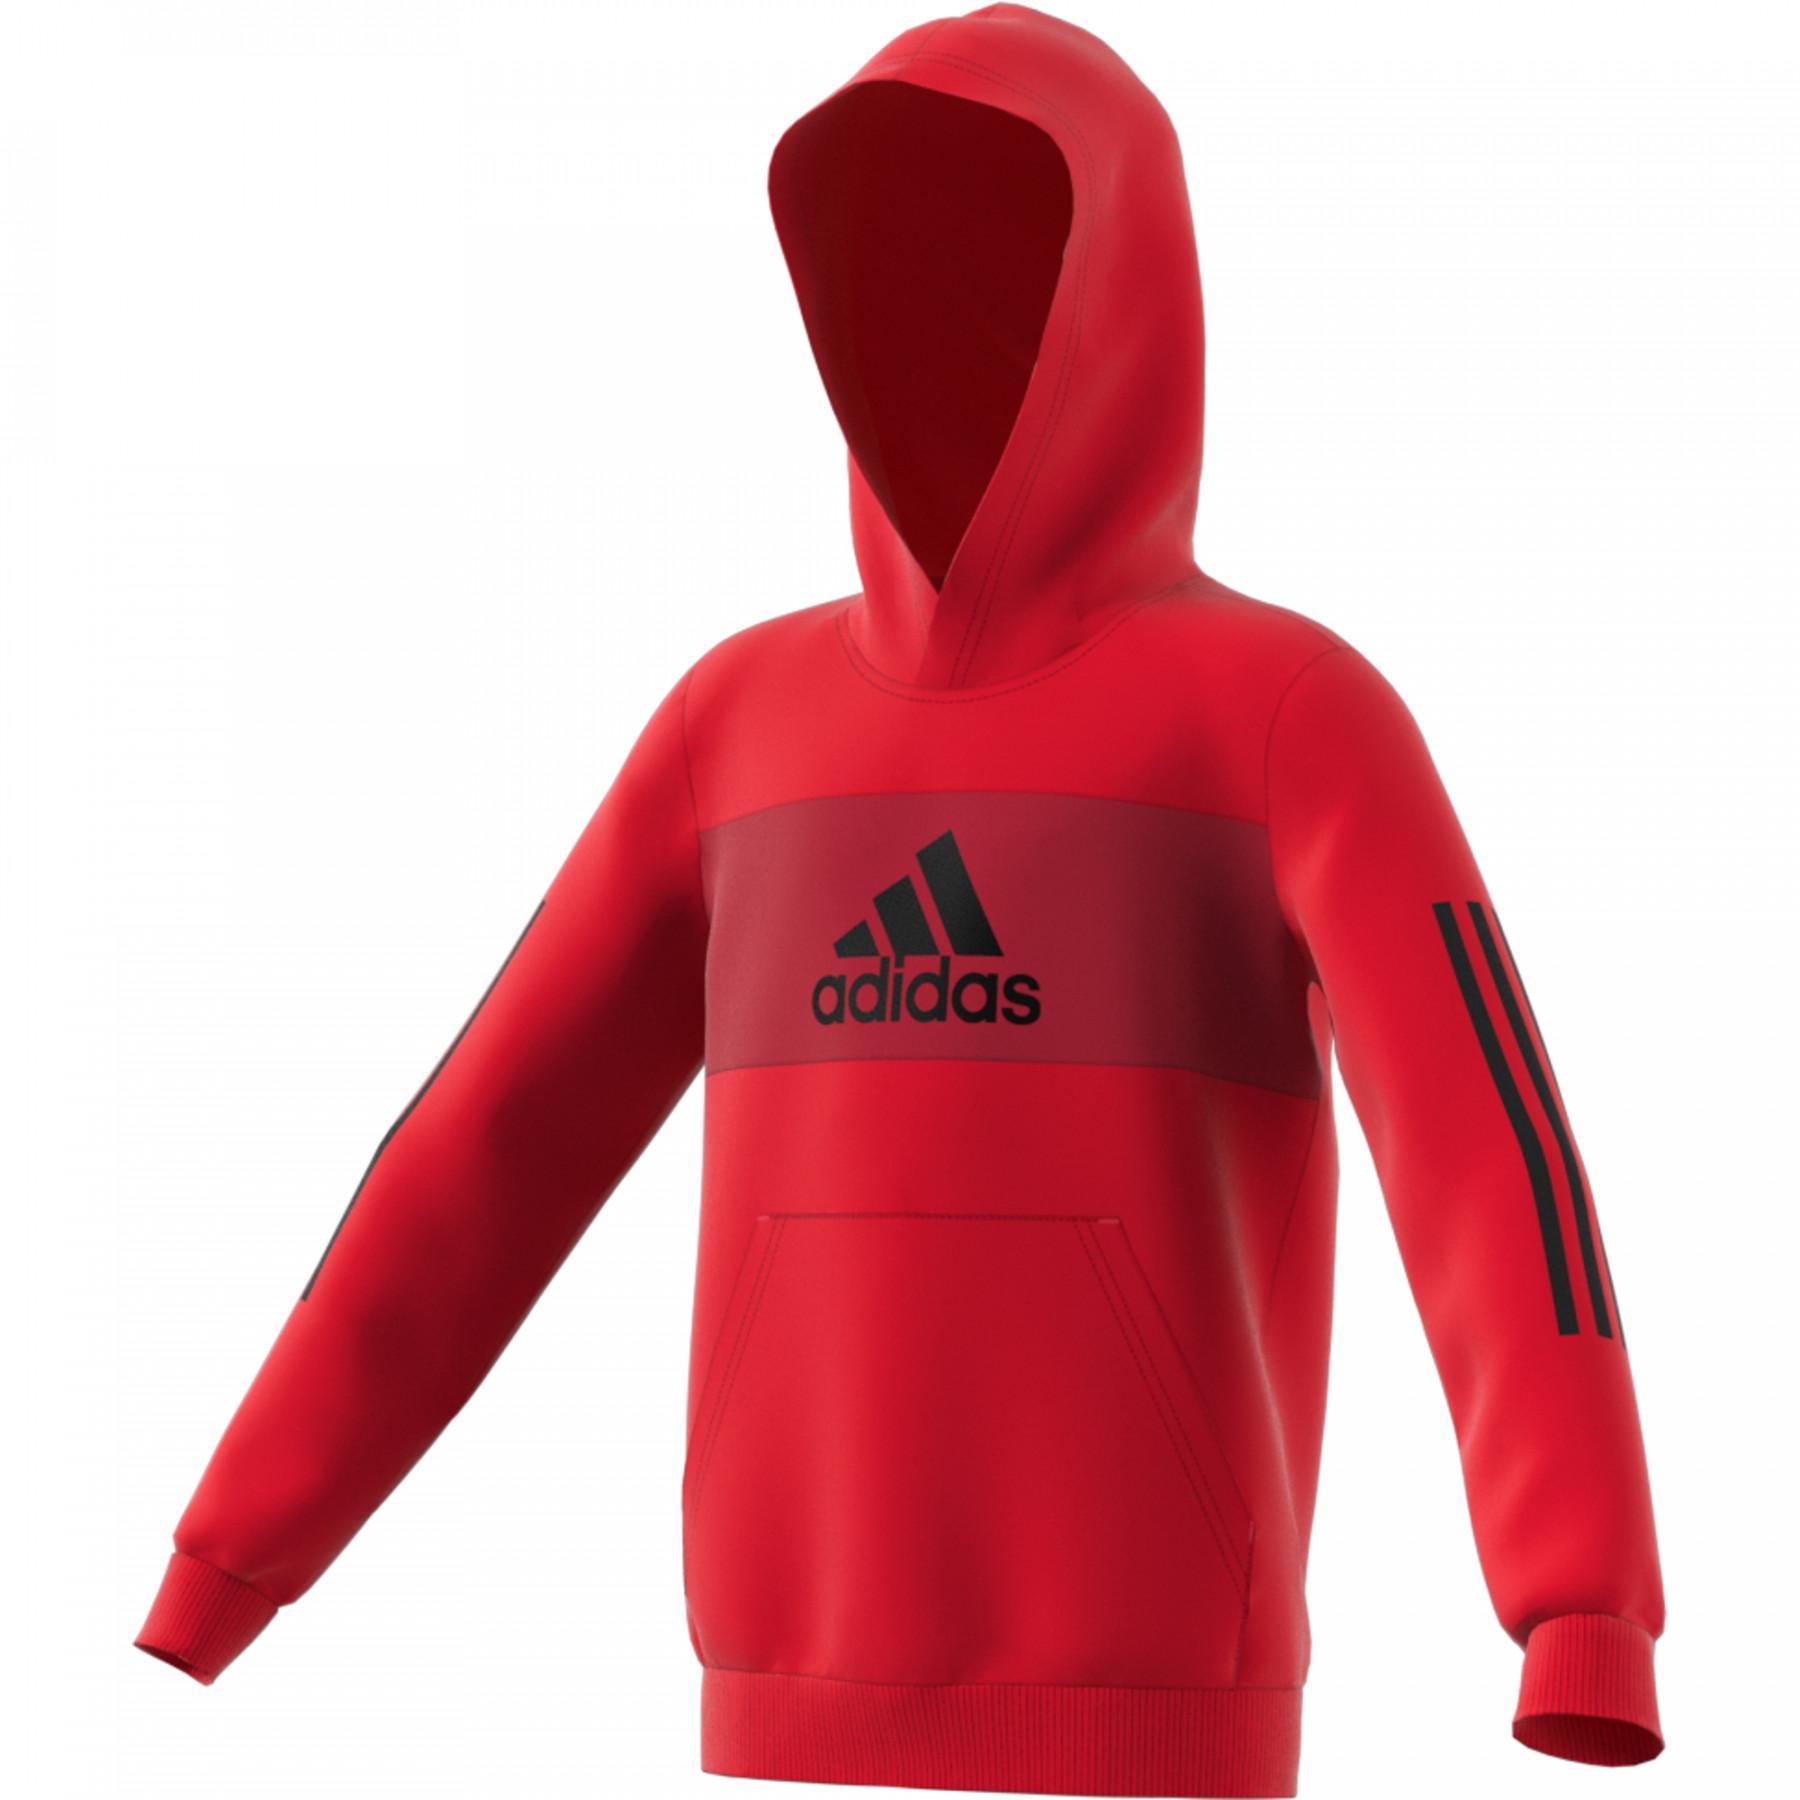 helikopter klok Geheugen Sweatshirt child adidas Sport ID Pullover - adidas - Brands - Handball wear